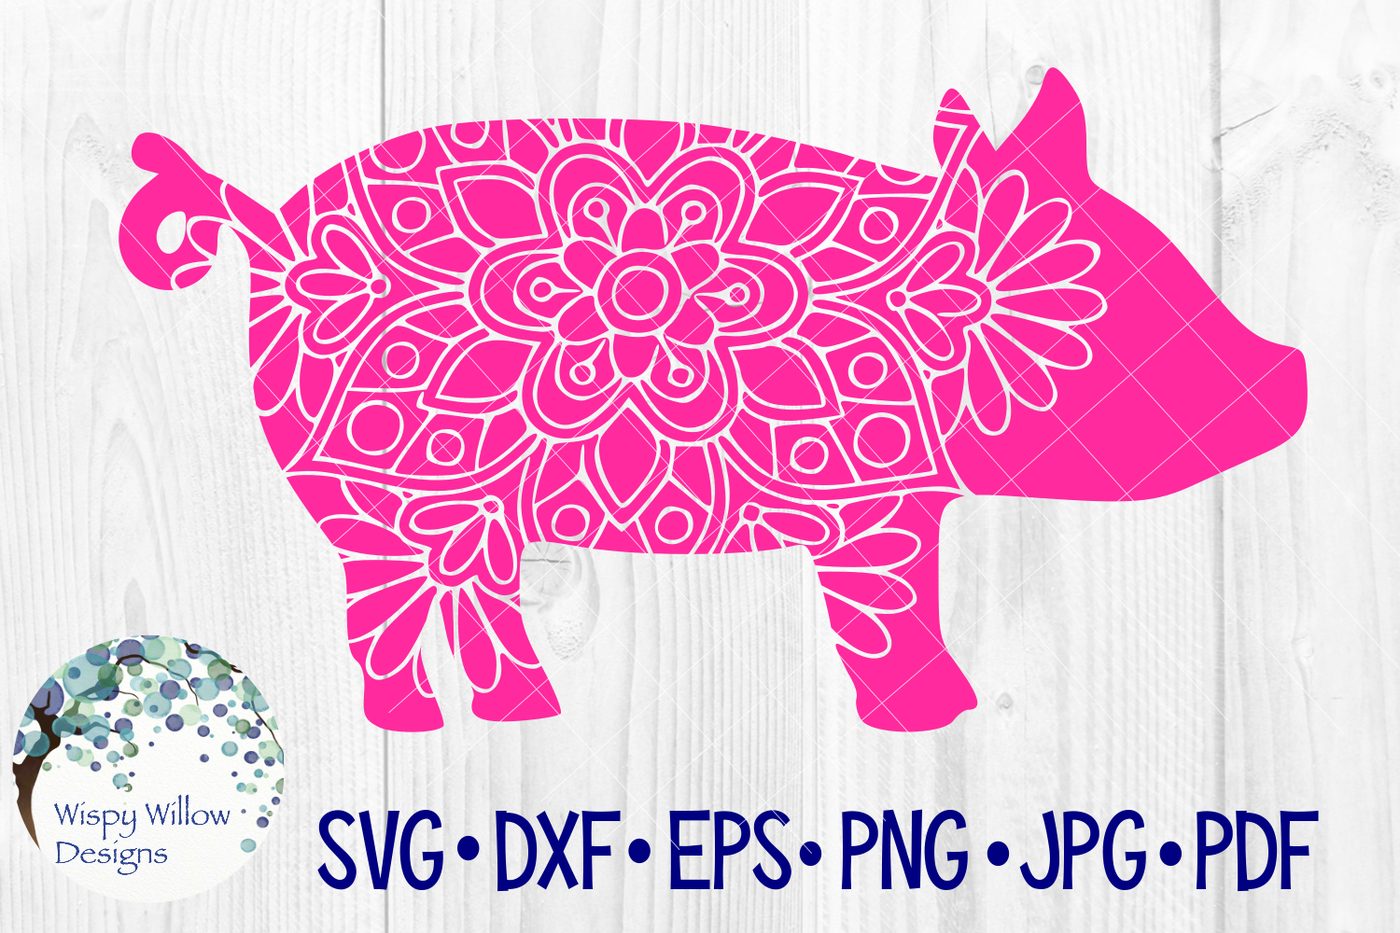 Floral Pig Mandala Svg Dxf Eps Png Jpg Pdf By Wispy Willow Designs Thehungryjpeg Com